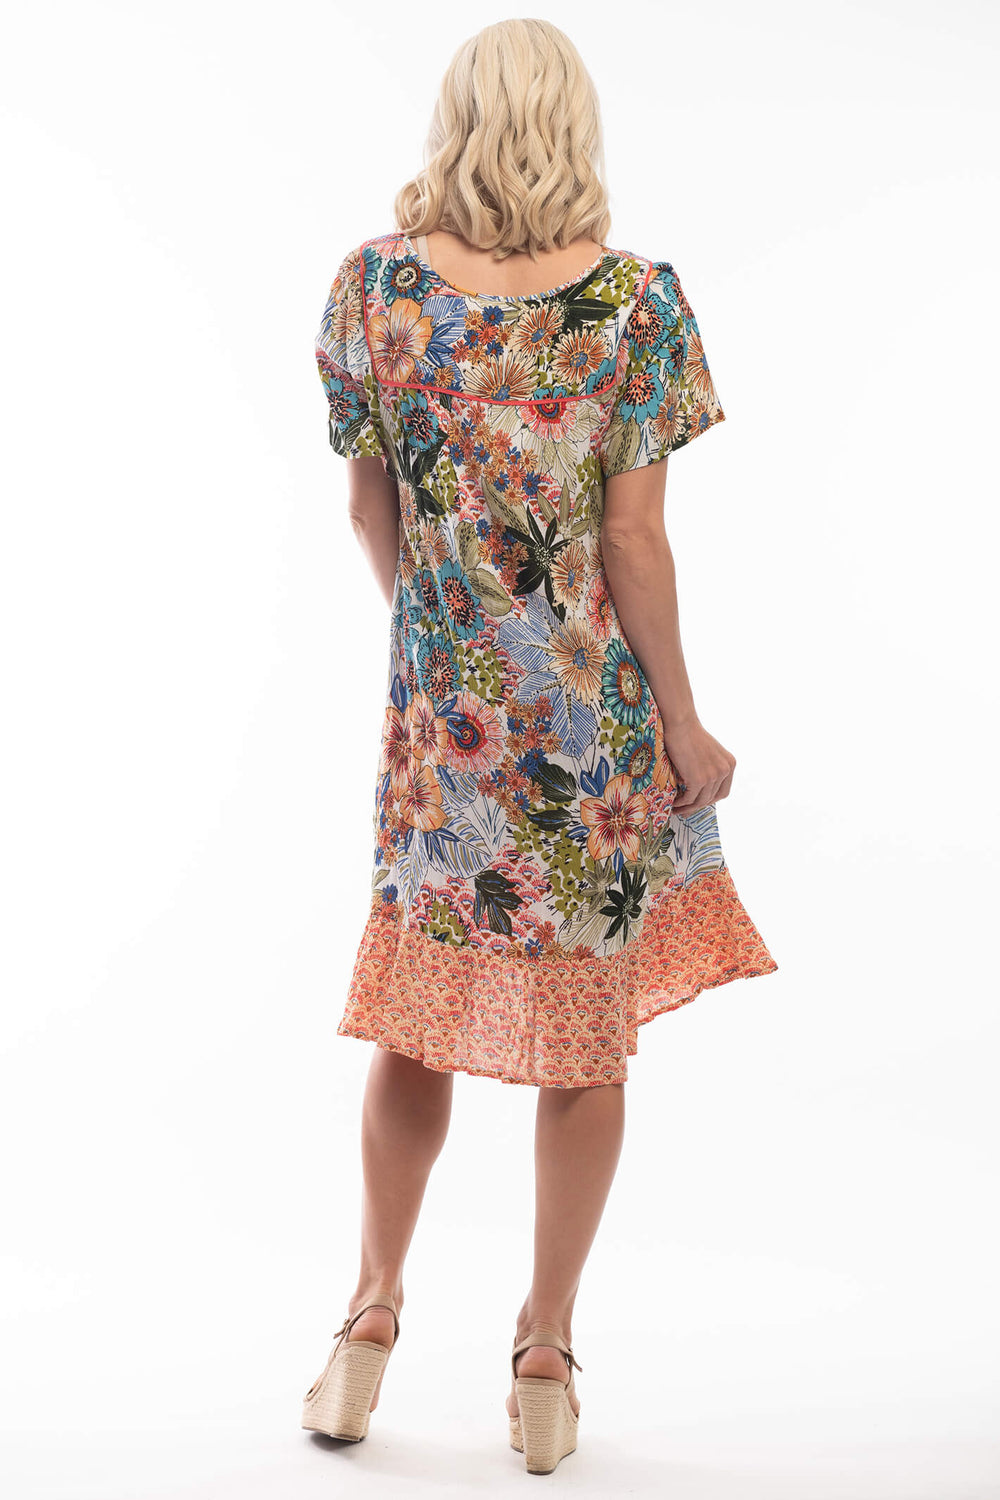 Orientique Bibury 8122 Coral Bib Print Dress - Shirley Allum Boutique